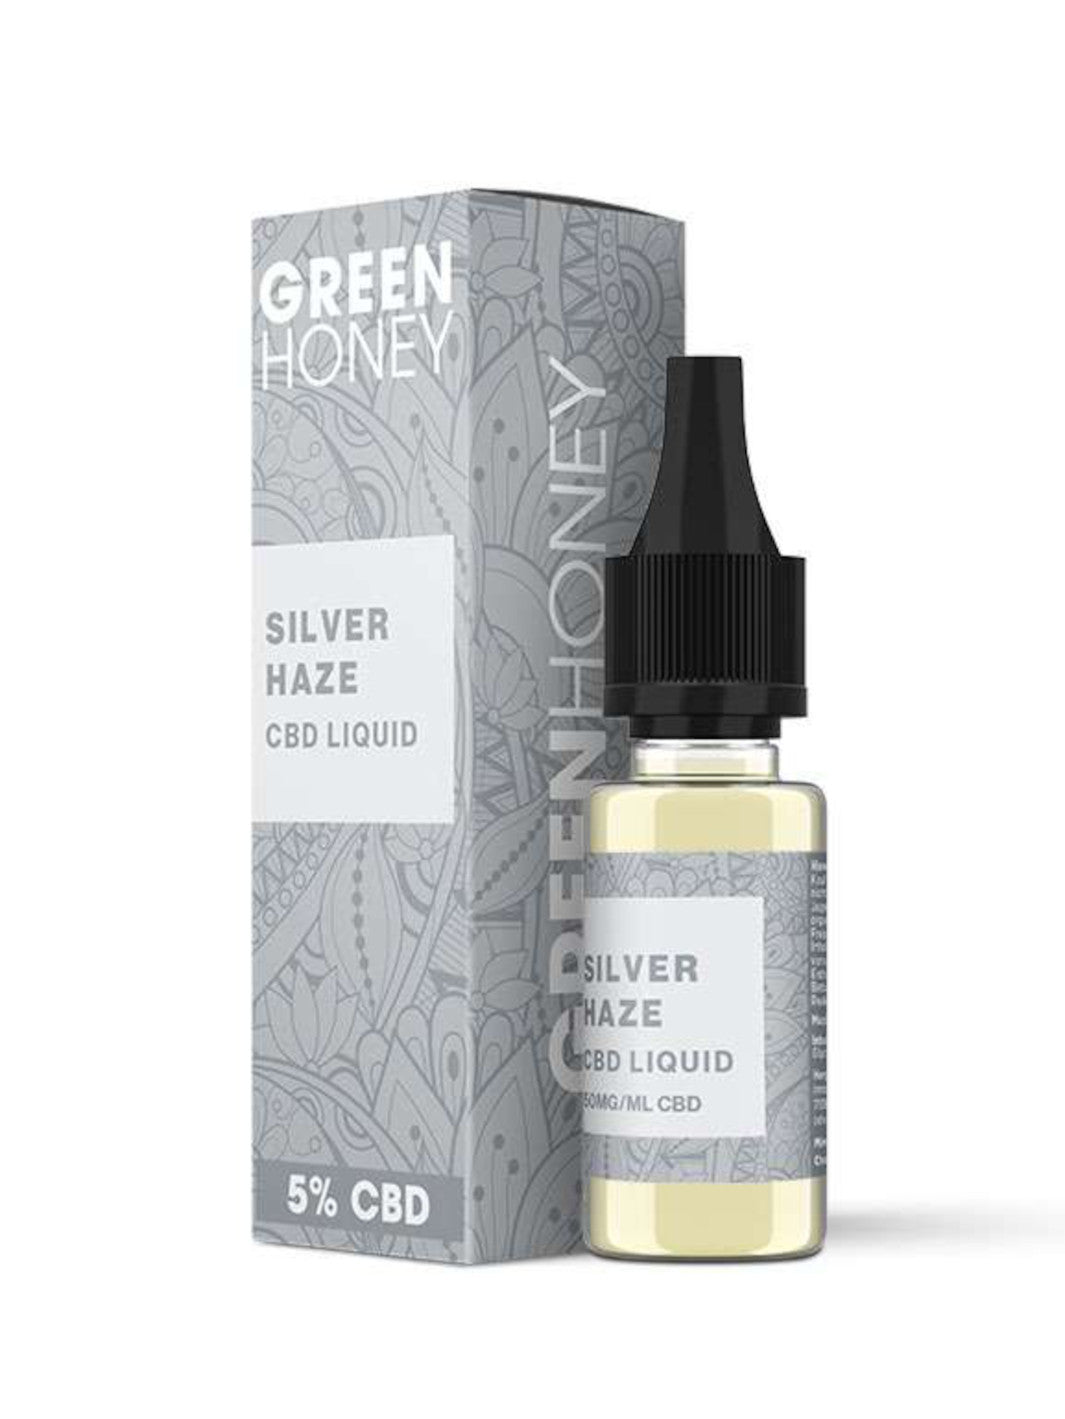 Green Honey CBD Liquid Silver Haze